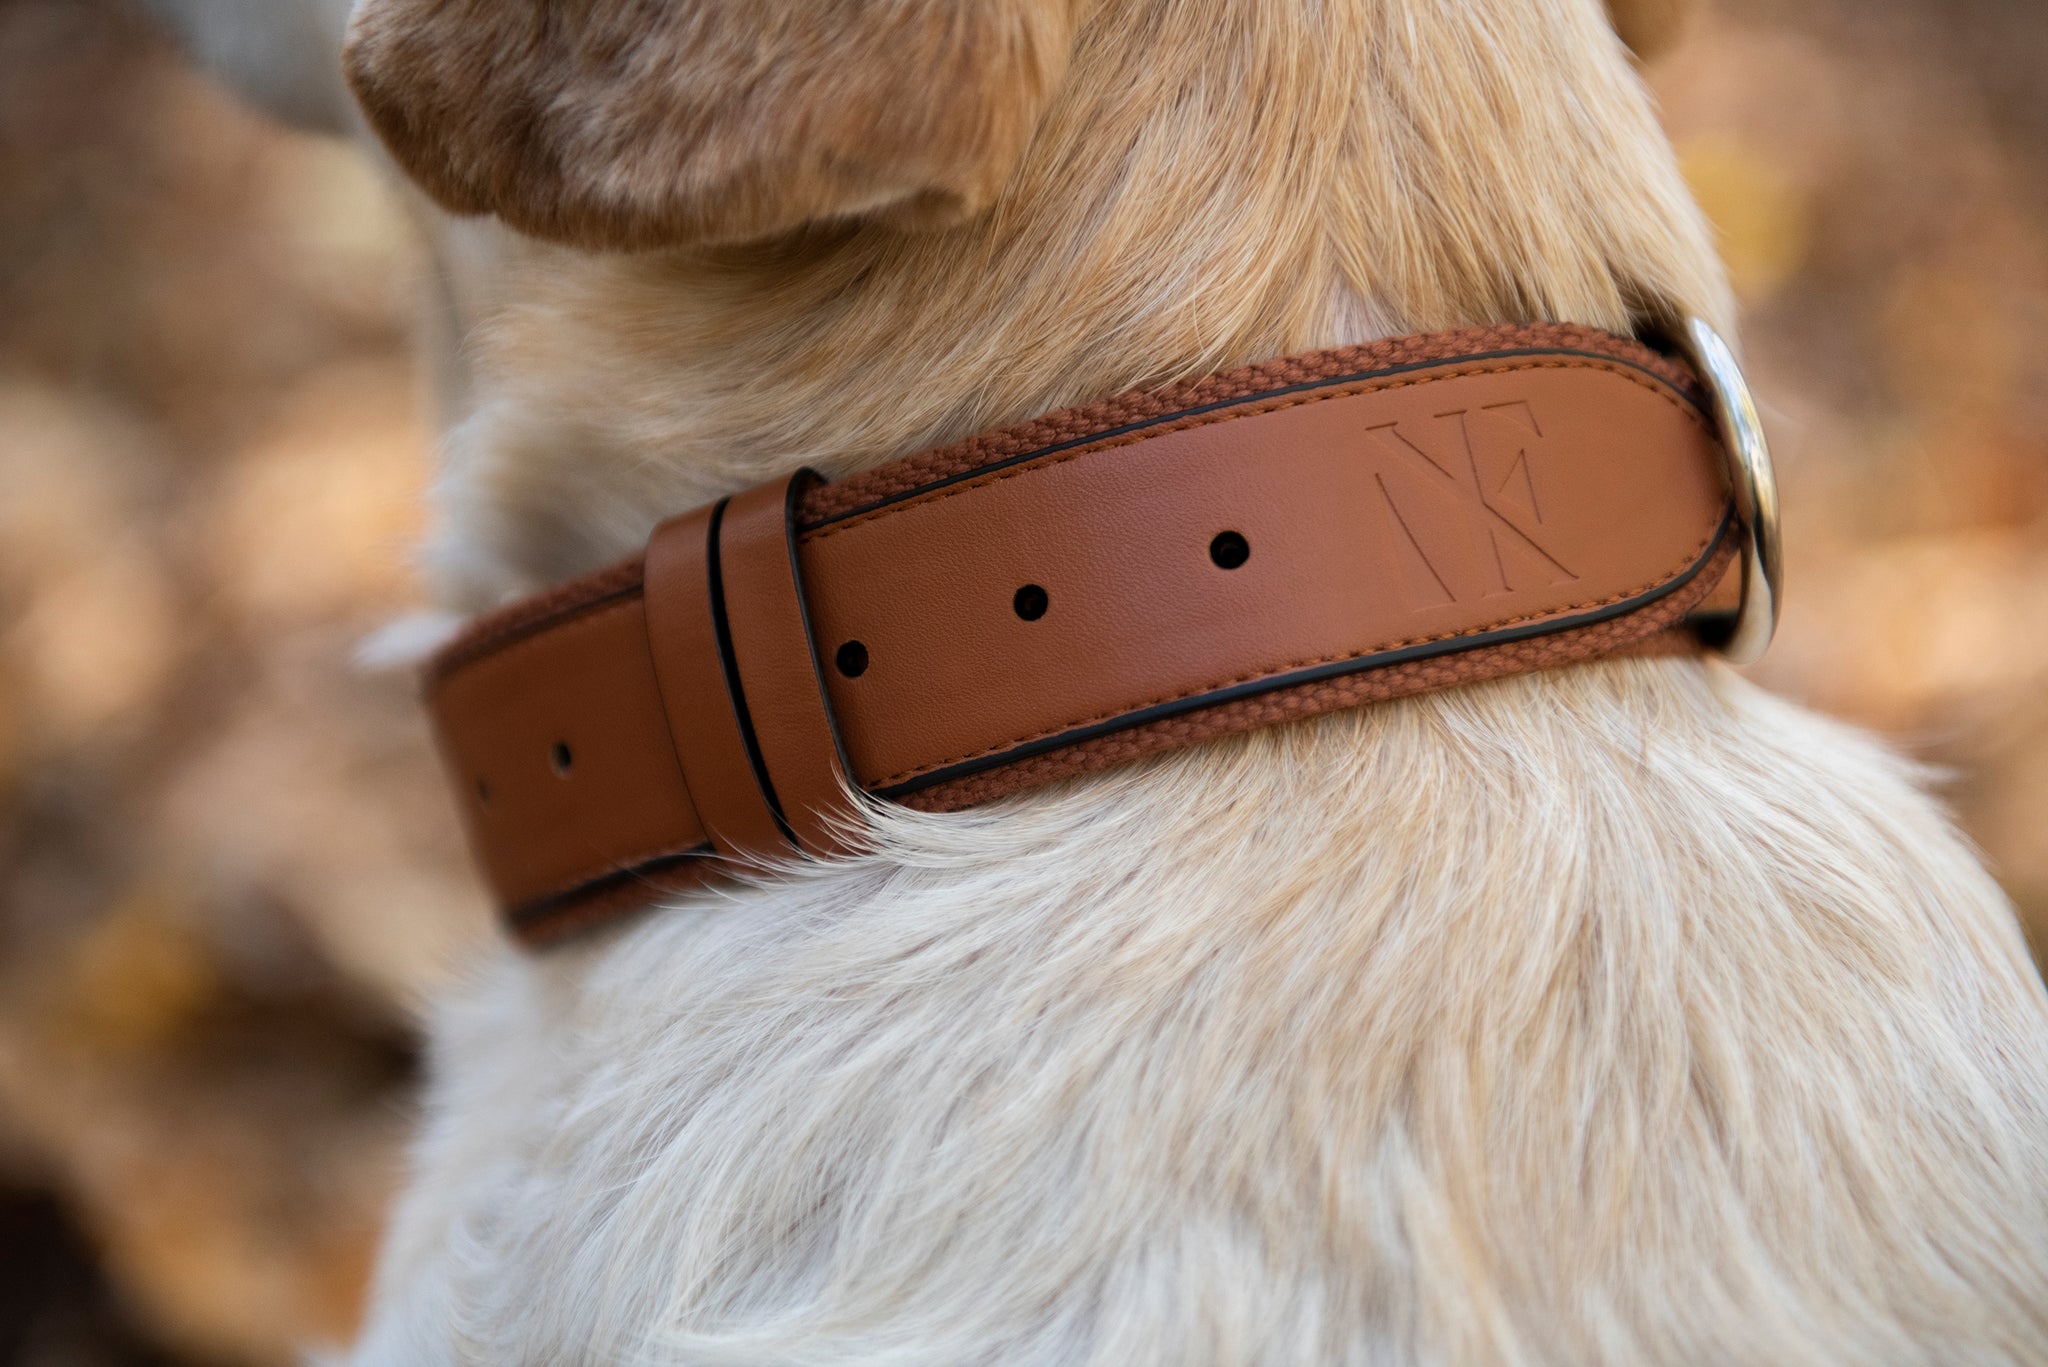 LOUIS VUITTON Dog Collar Brown Beige Monogram Coated Leather Goods